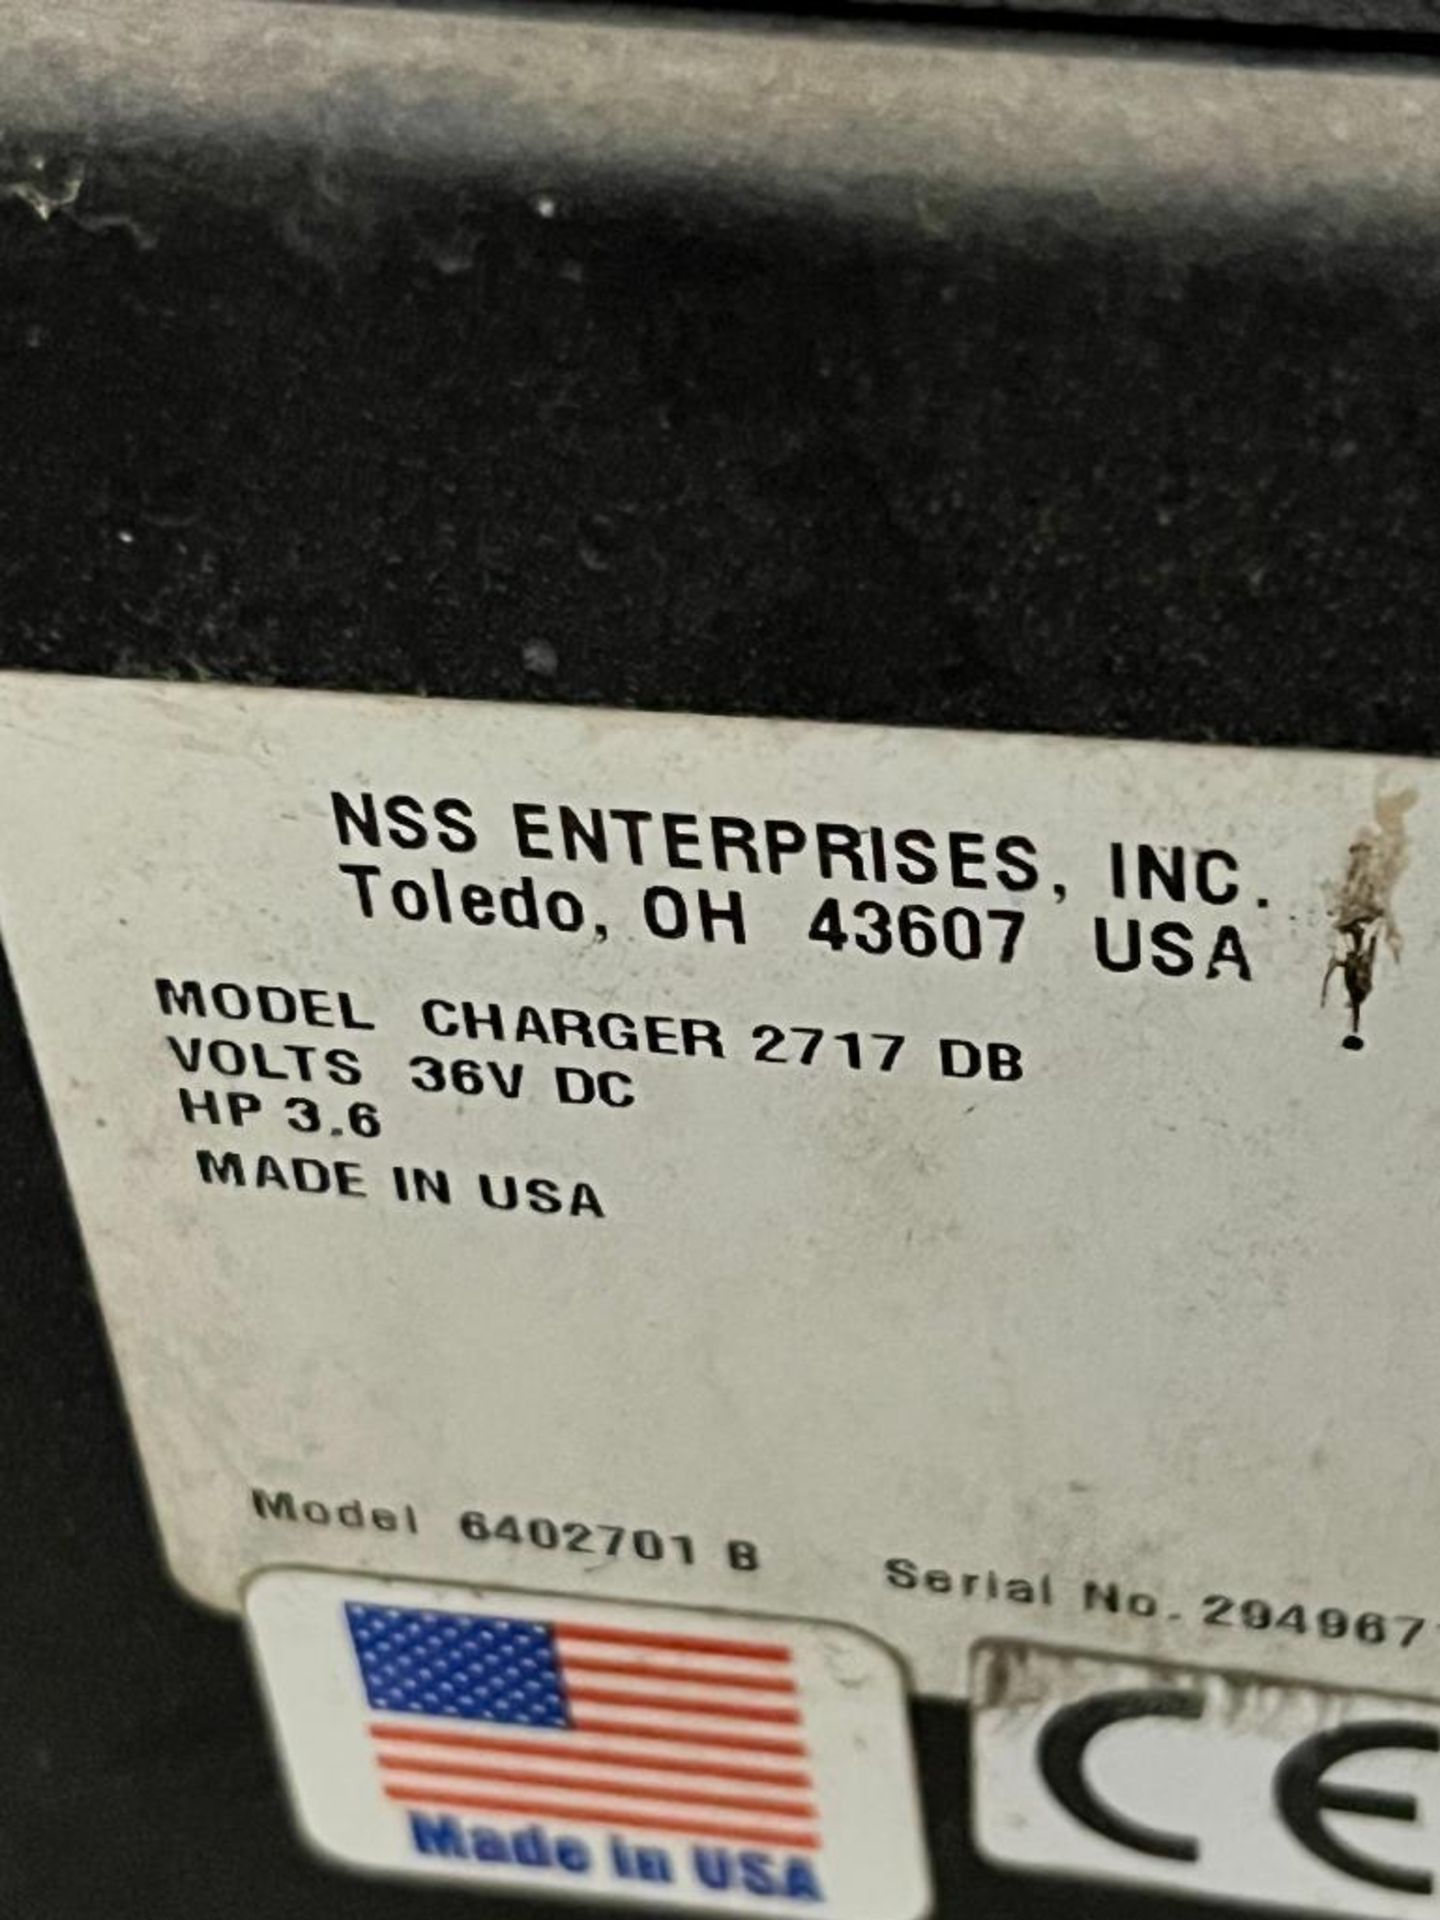 NSS Enterprises Model Charger 2717 DB Floor Scrubber, Model 6402701B, S/N 29496710 - Image 4 of 6